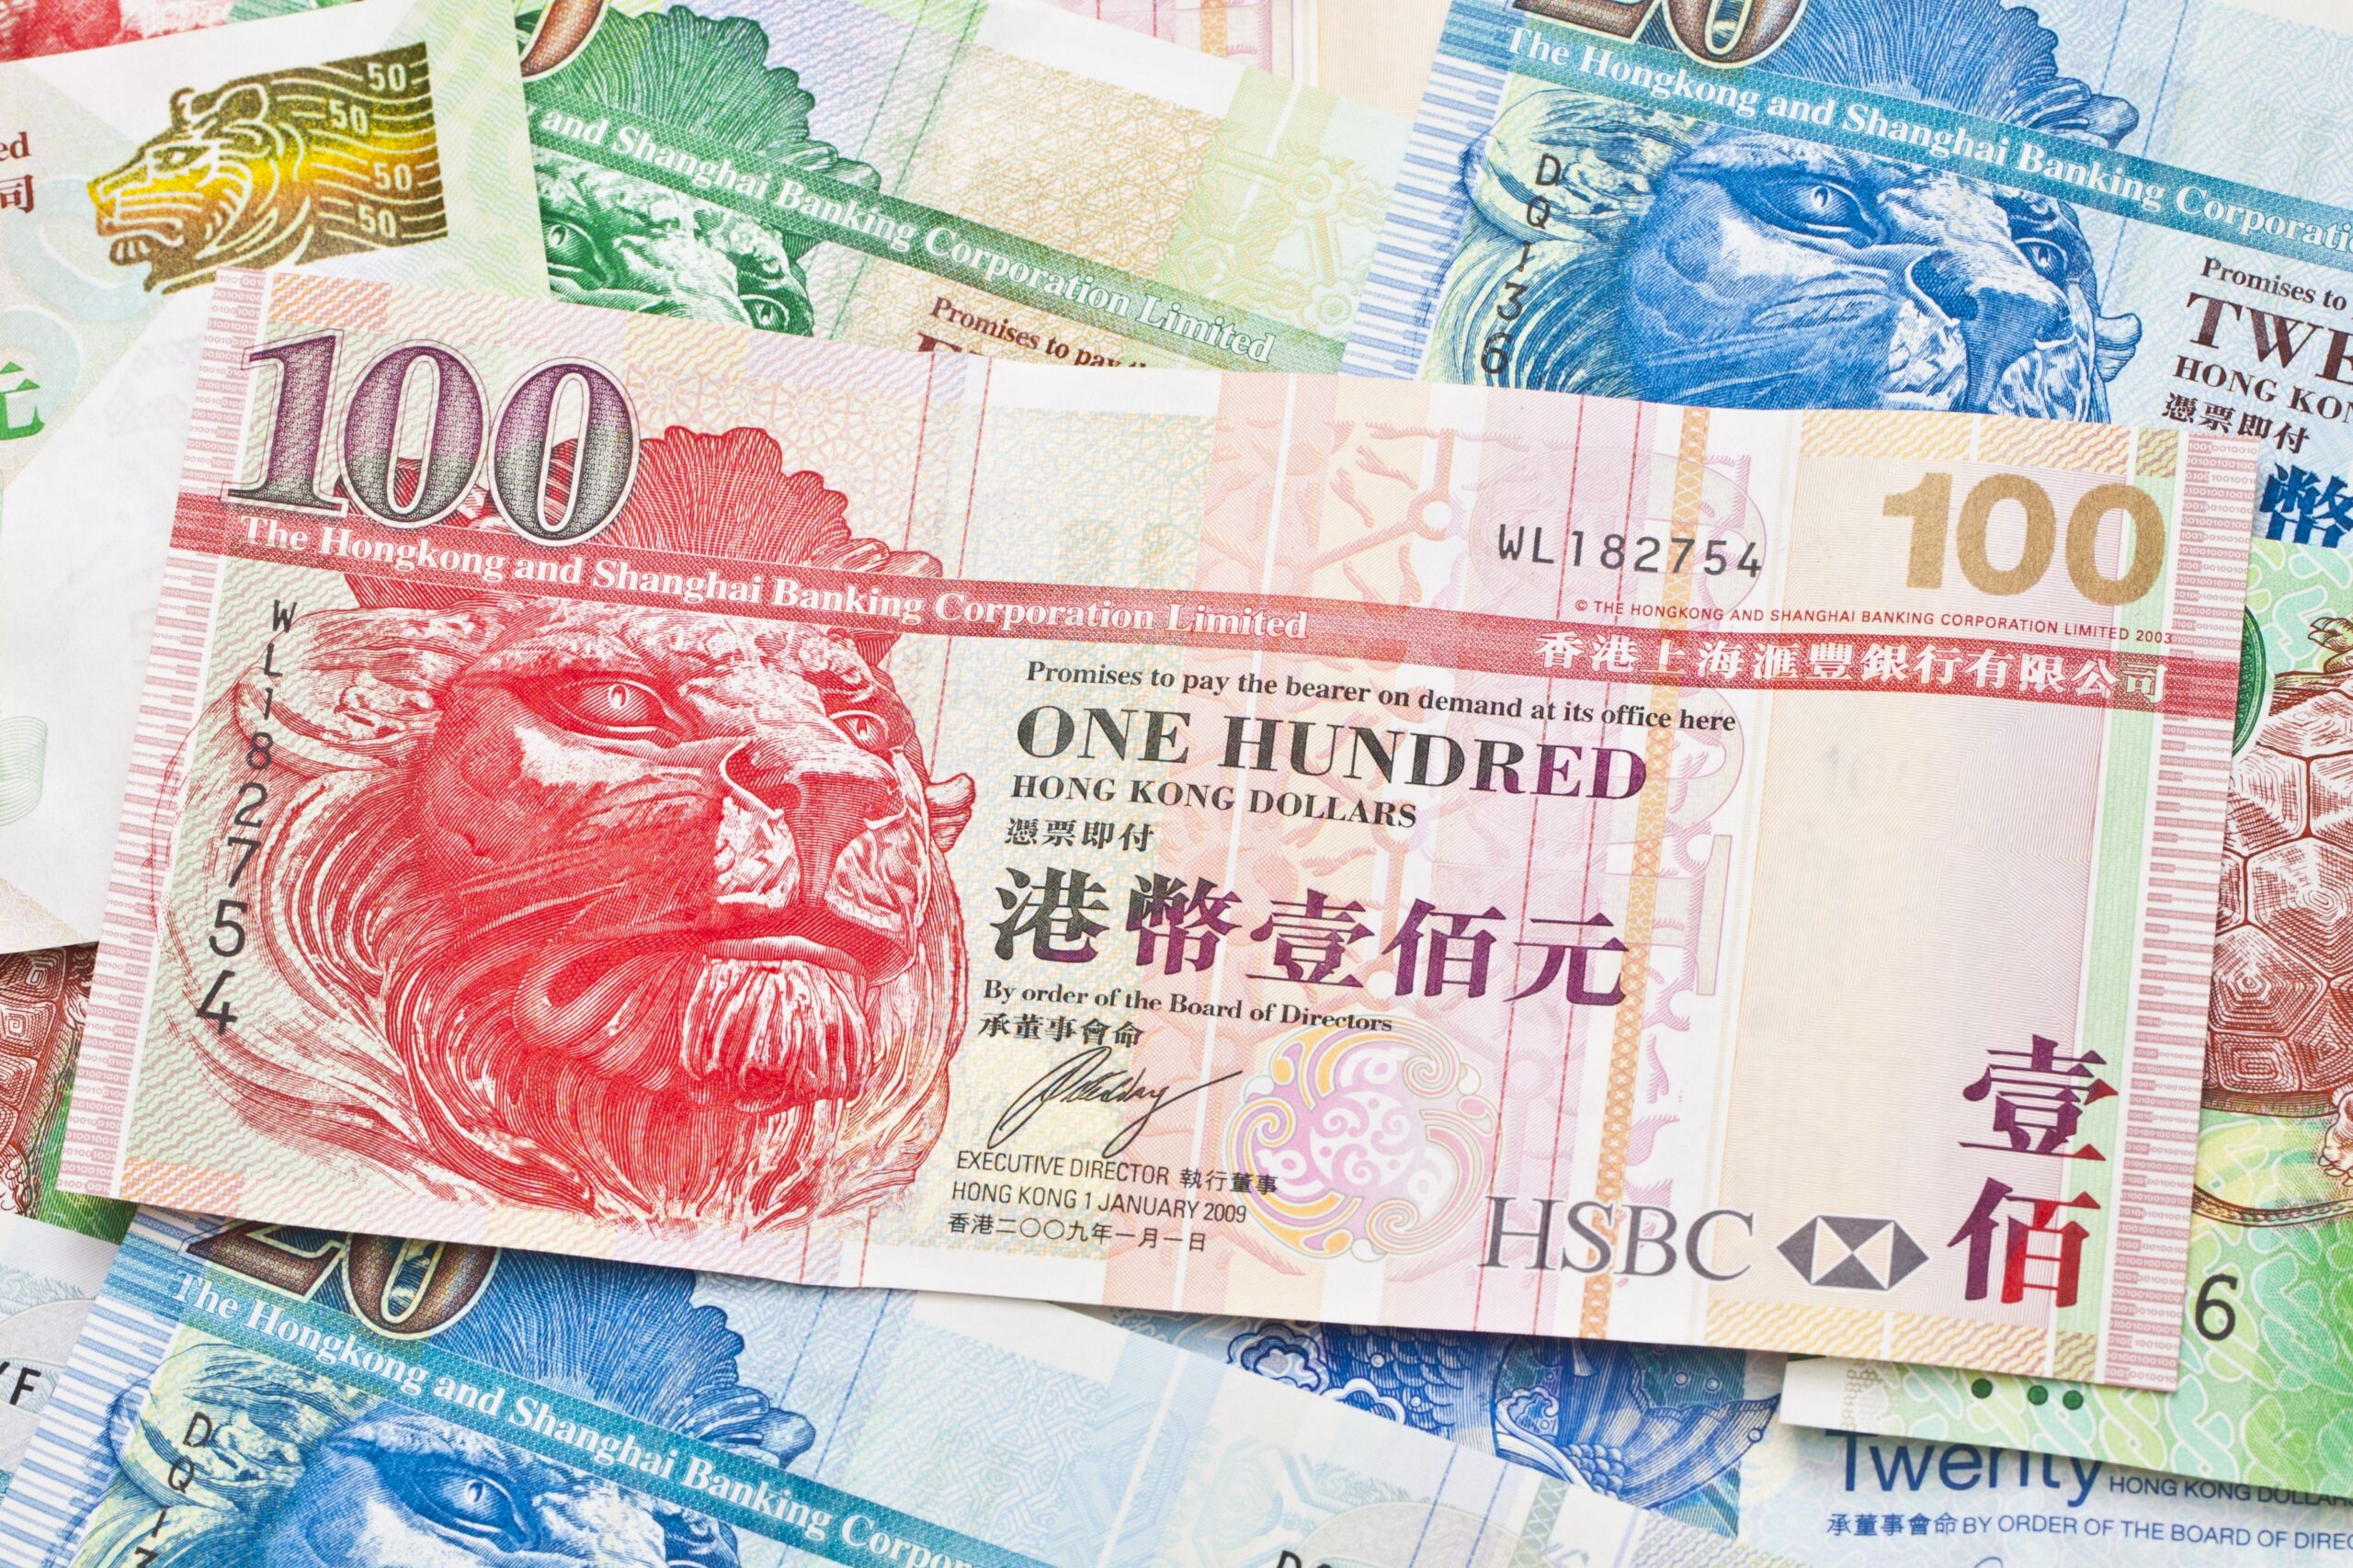 HKD валюта. Hong Kong currency. Гонконгский доллар на белом фоне. Валюта Гонконга. Hk в рублях